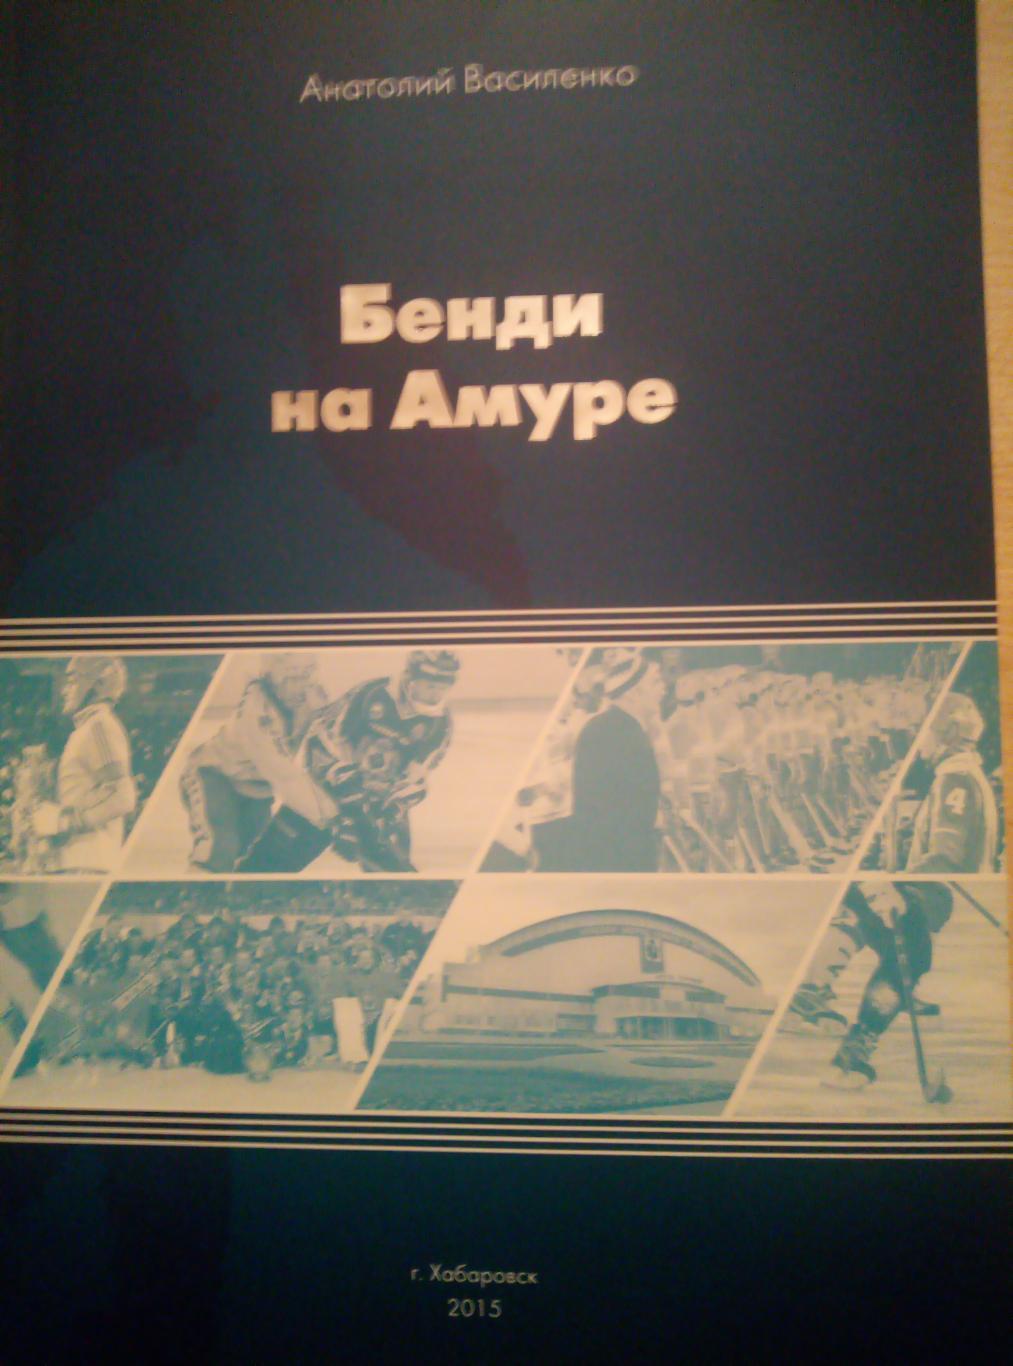 Книга Бенди на Амуре - изд.Хабаровск - 2015 (формат А-4)